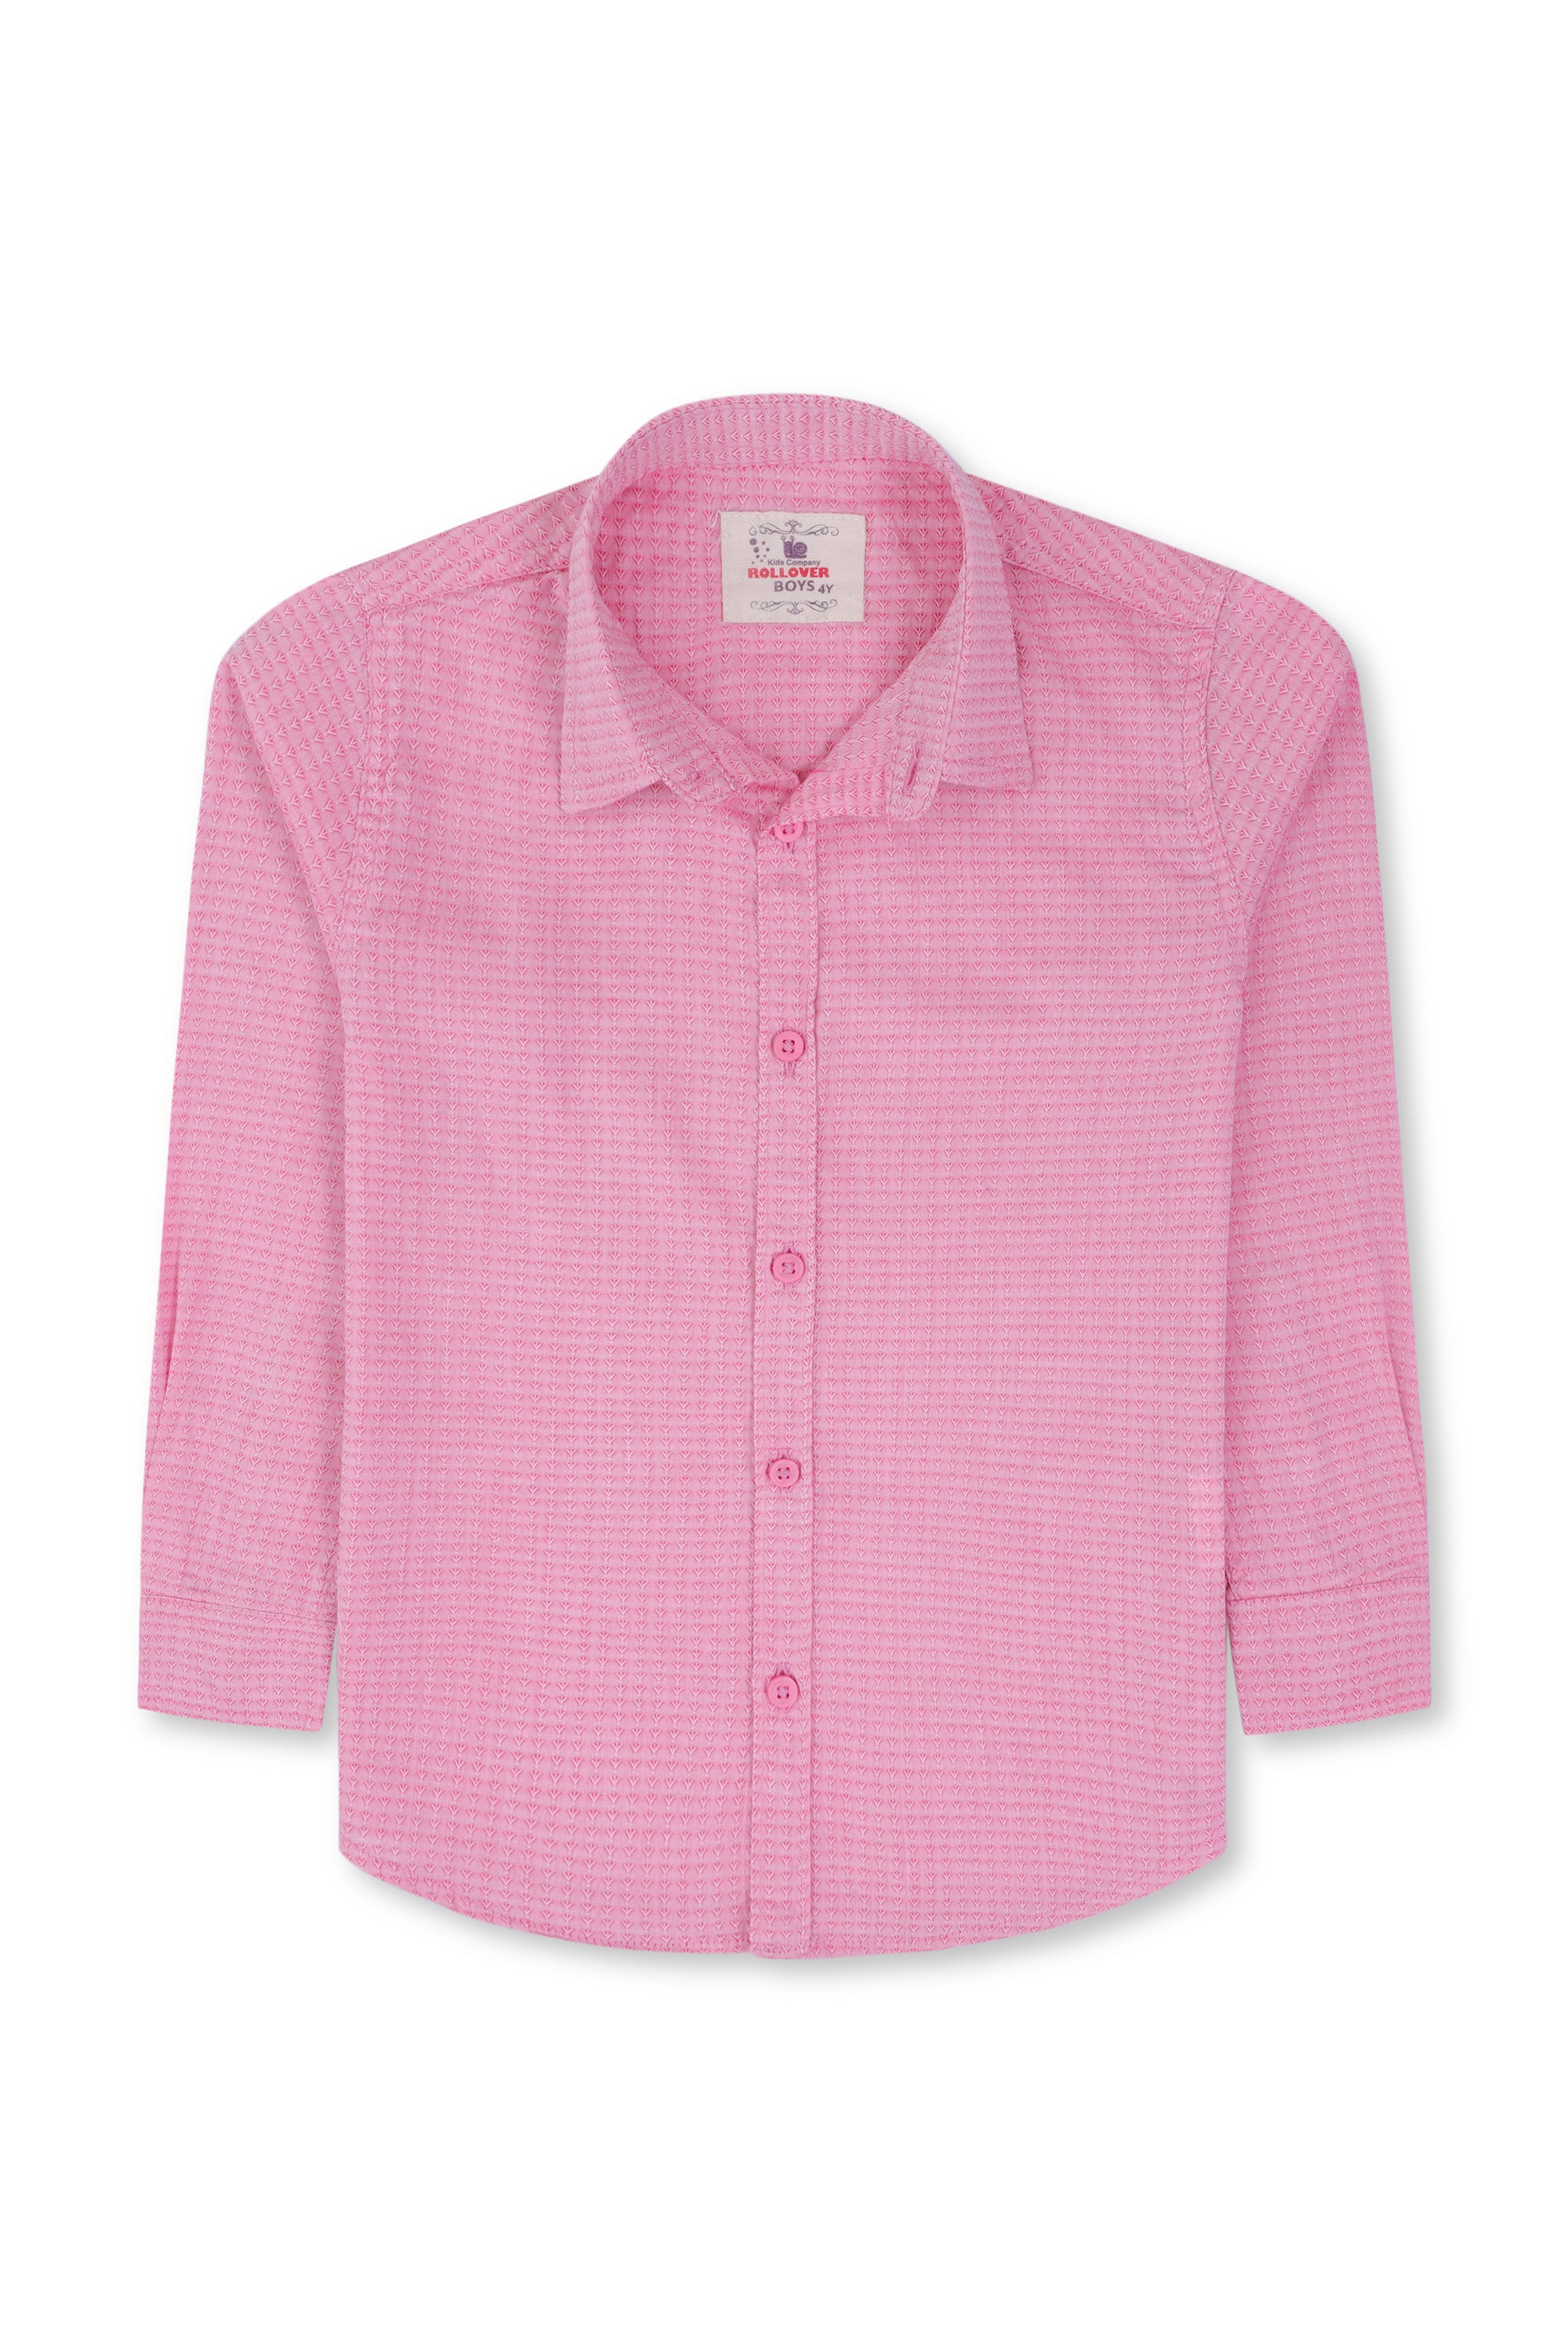 Boys Pink Casual Shirt